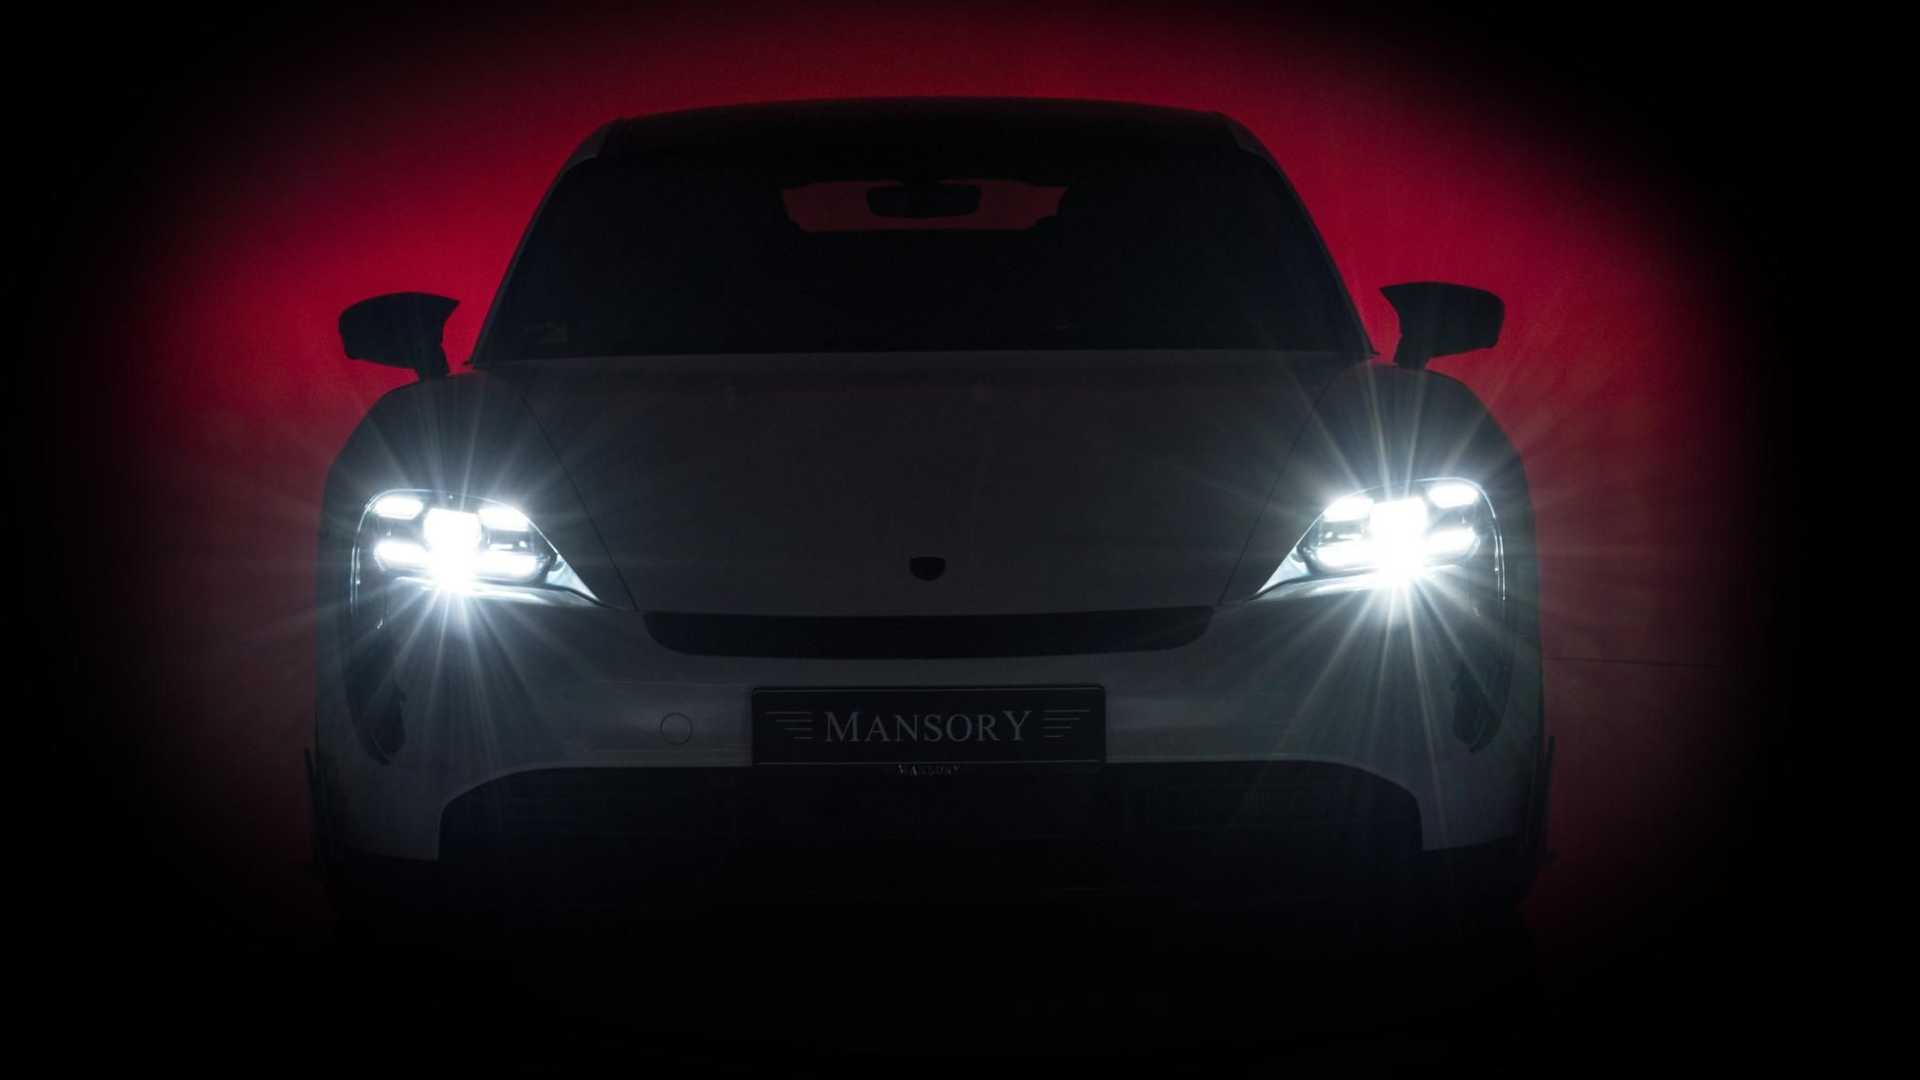 چراغ جلو پورشه تایکان تیونینگ منصوری / Mansory Porsche Taycan سفید رنگَ